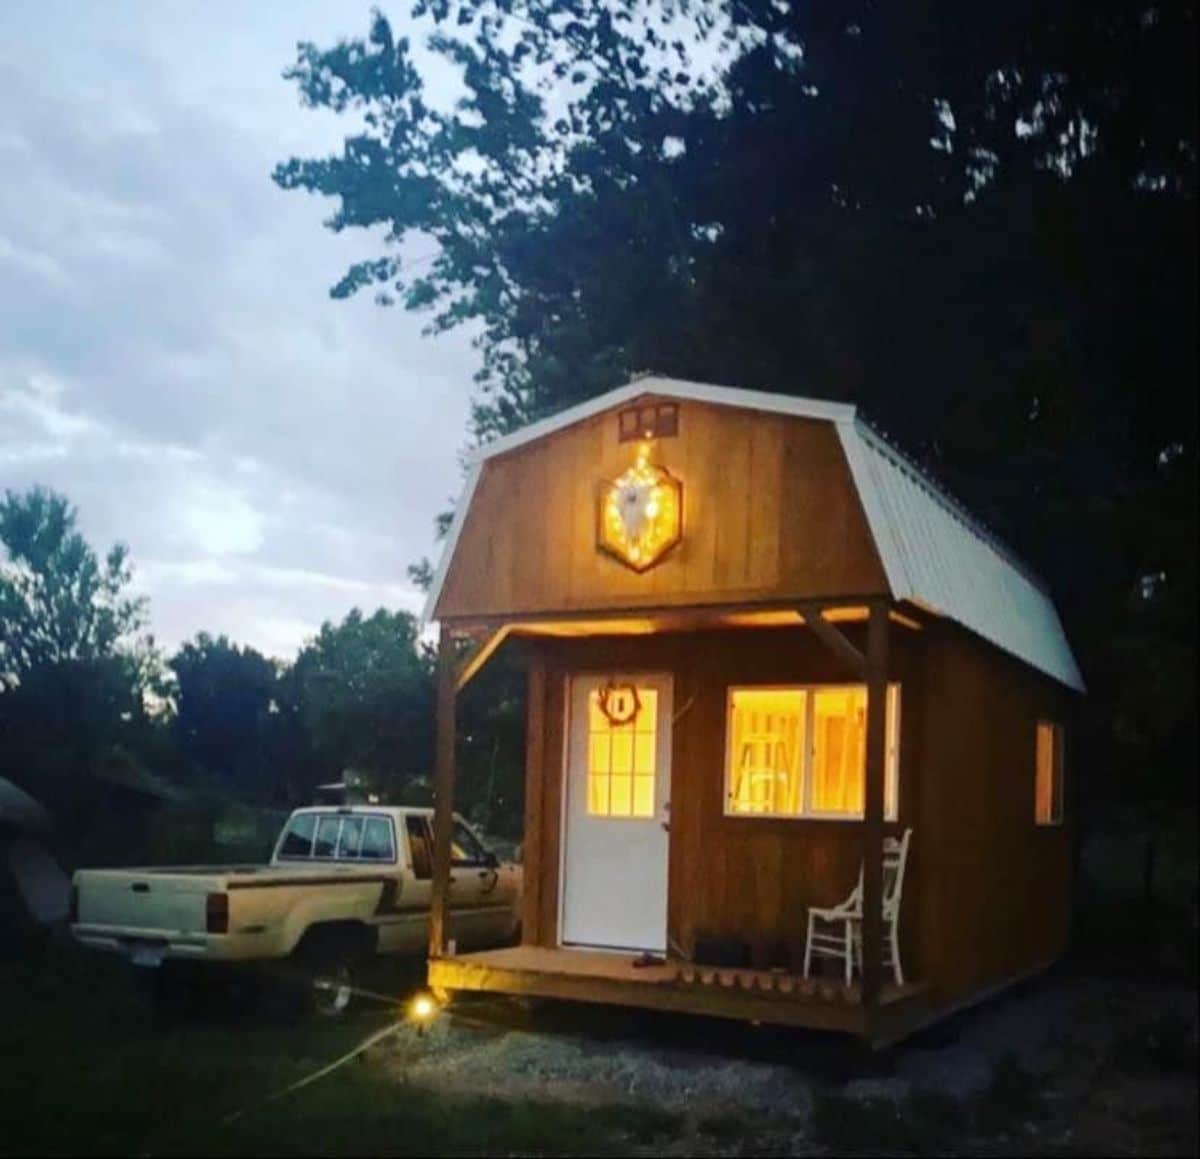 Stunning 20’ barn style tiny home at night